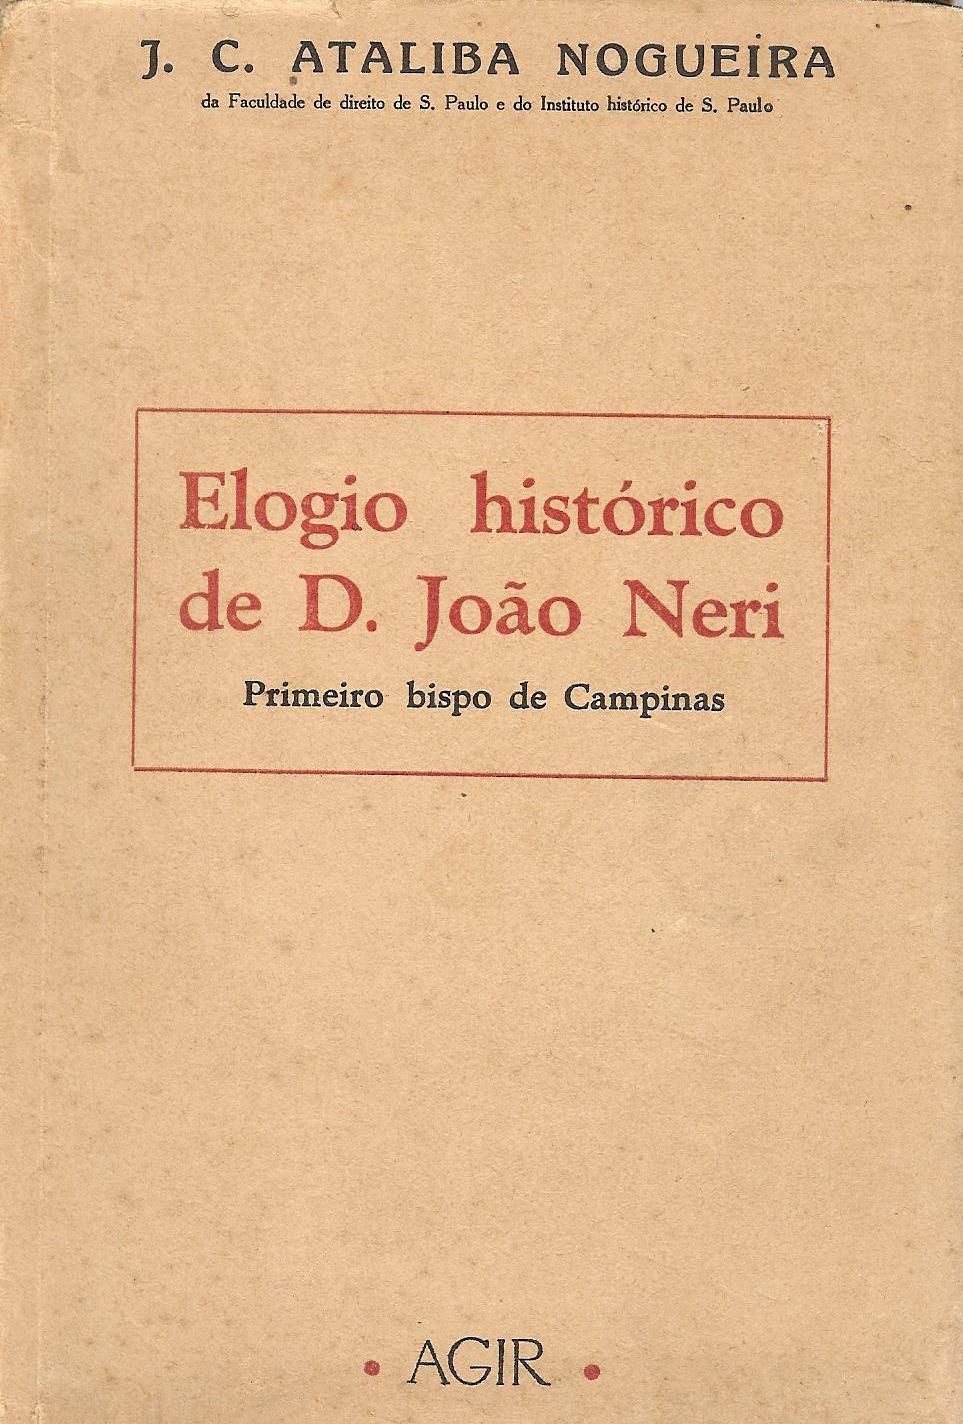 [Elogio+Historico+de+D+Joao+Neri+-+JC+Ataliba+Nogueira+-+Editora+Agir++RJ+1945+pg+96+1.JPG]